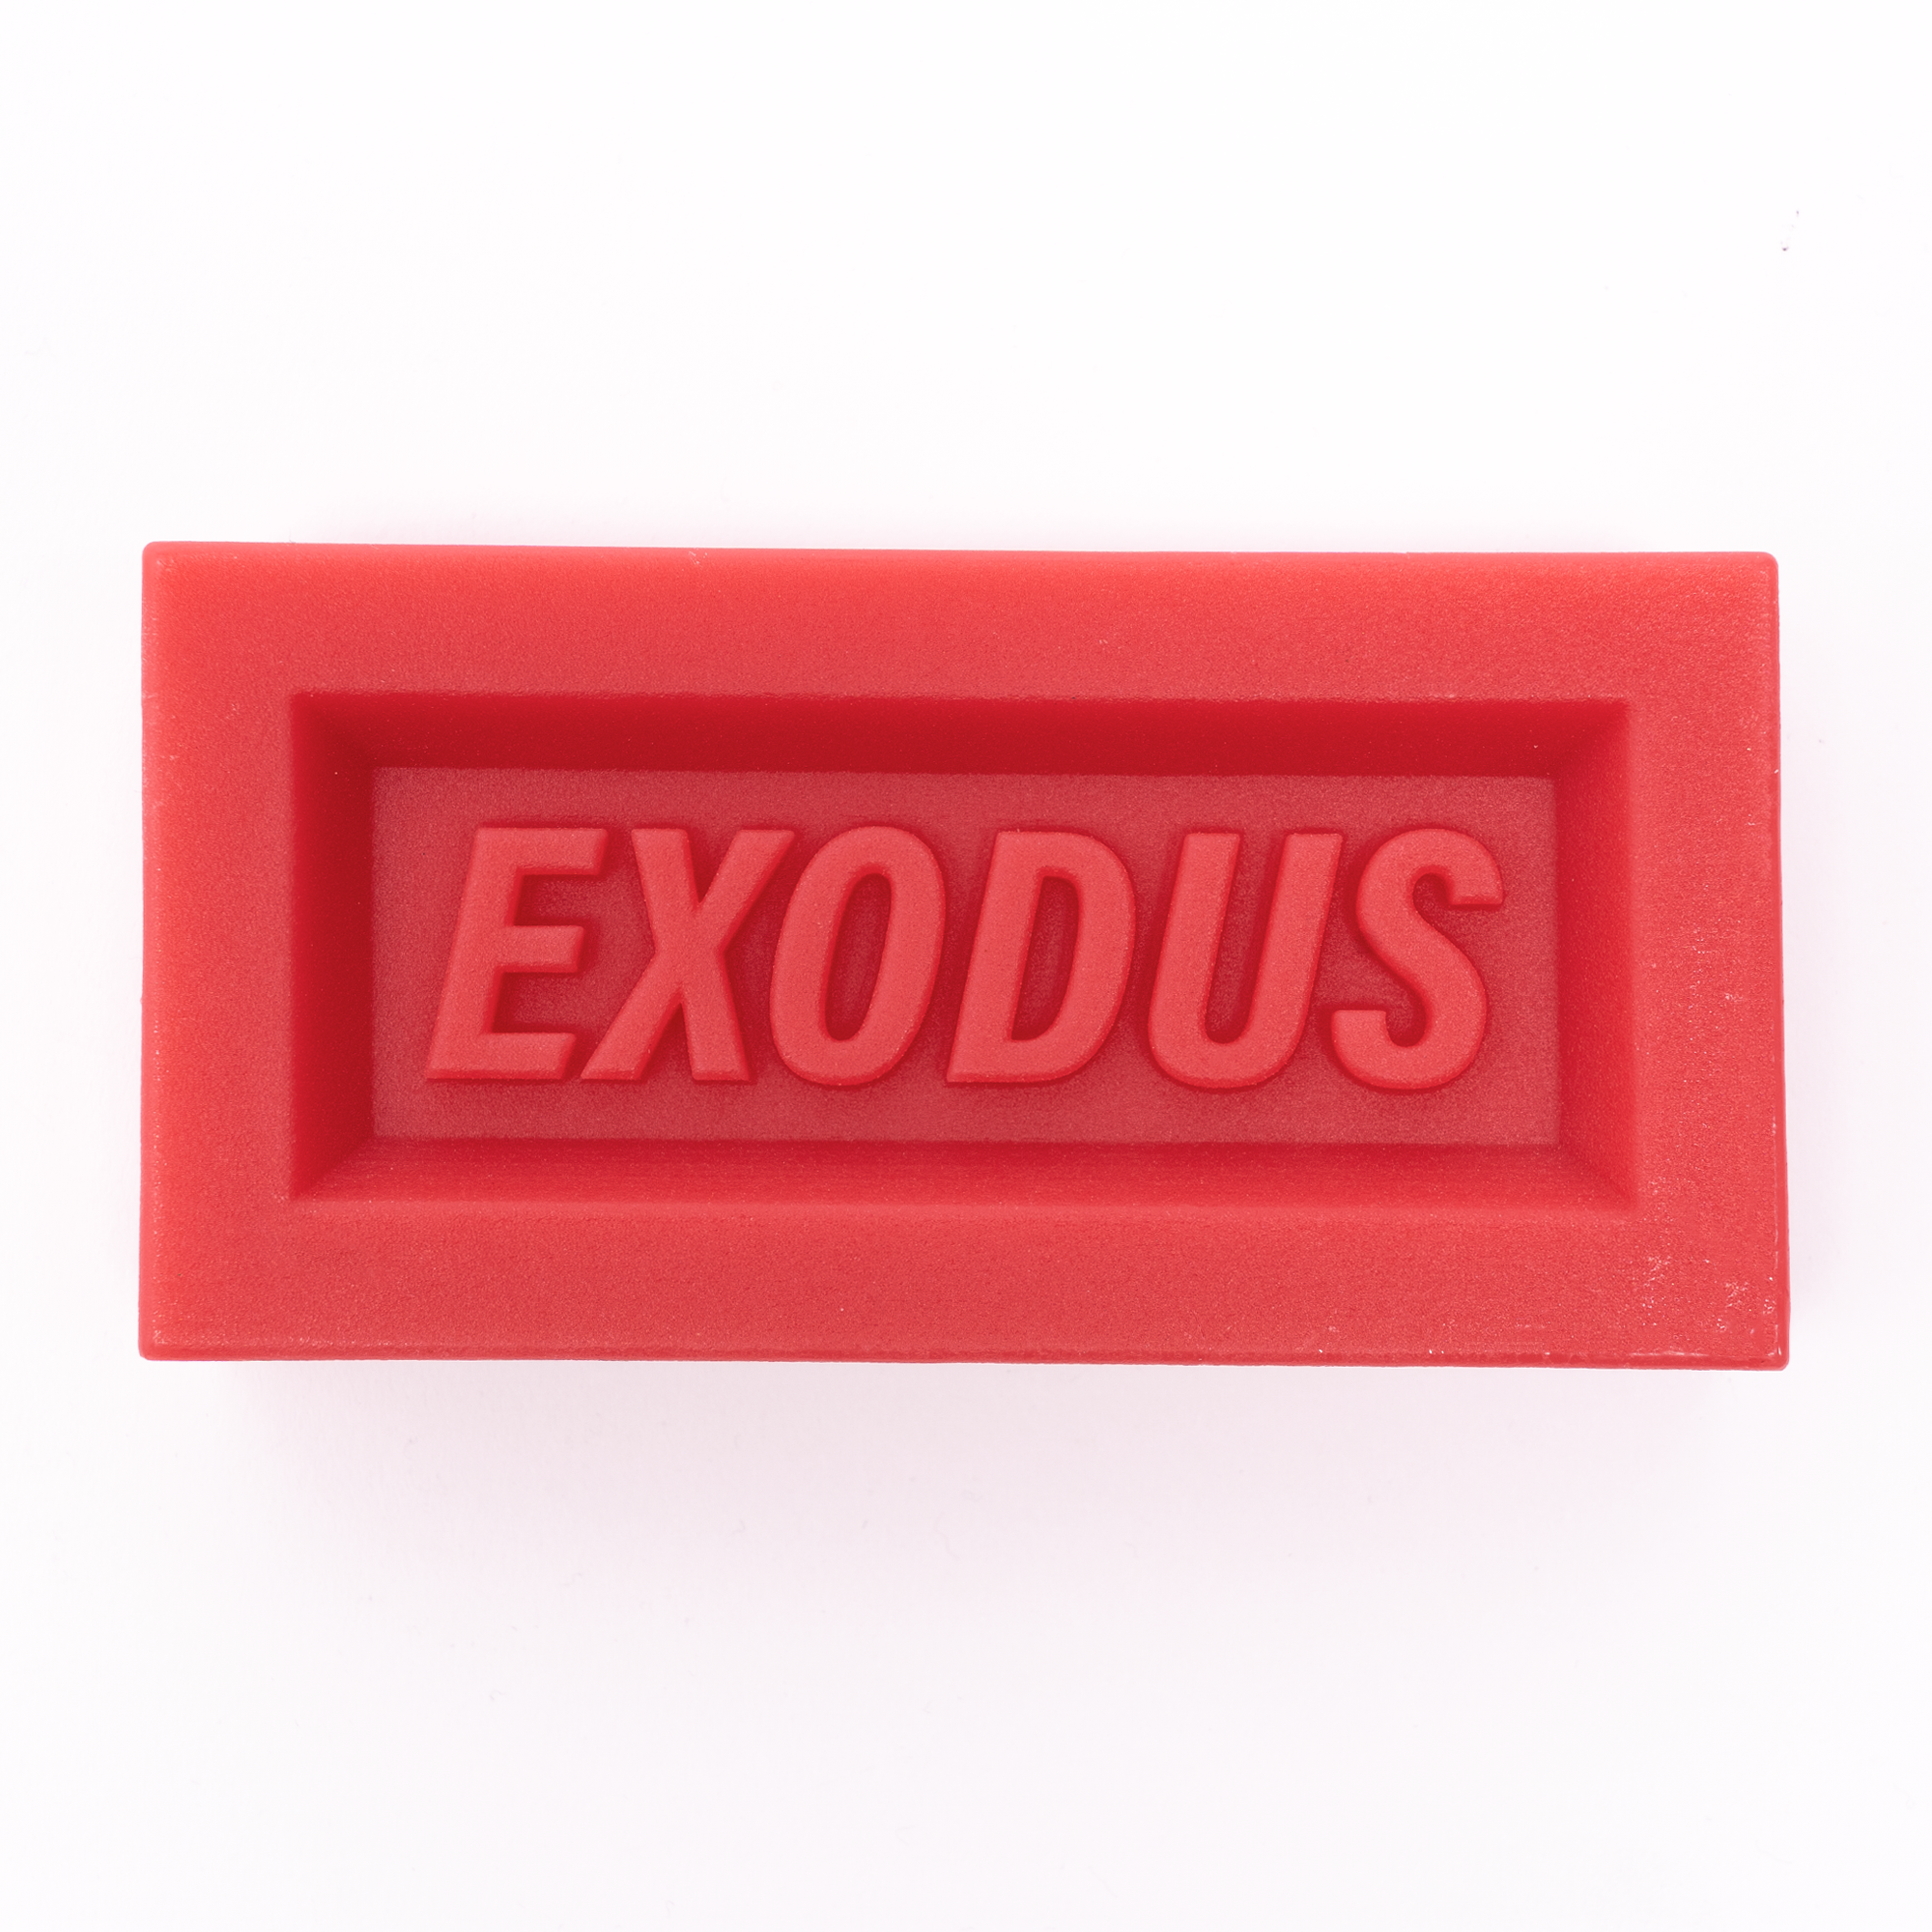 Red Brick Exodus Skateboard Wax